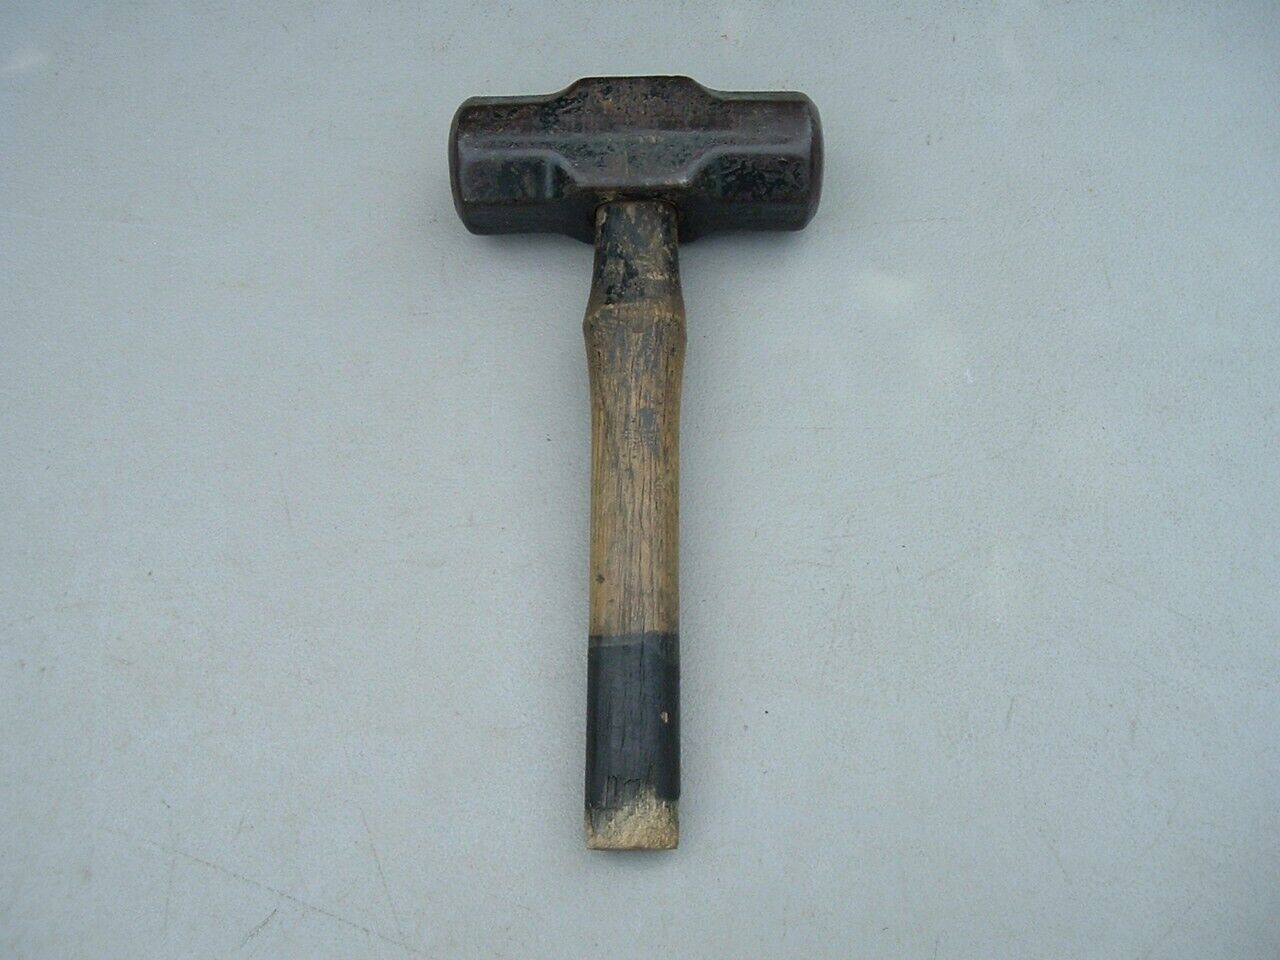 Vintage Ryan Blacksmith Sledge Hammer 6 lb 9 oz